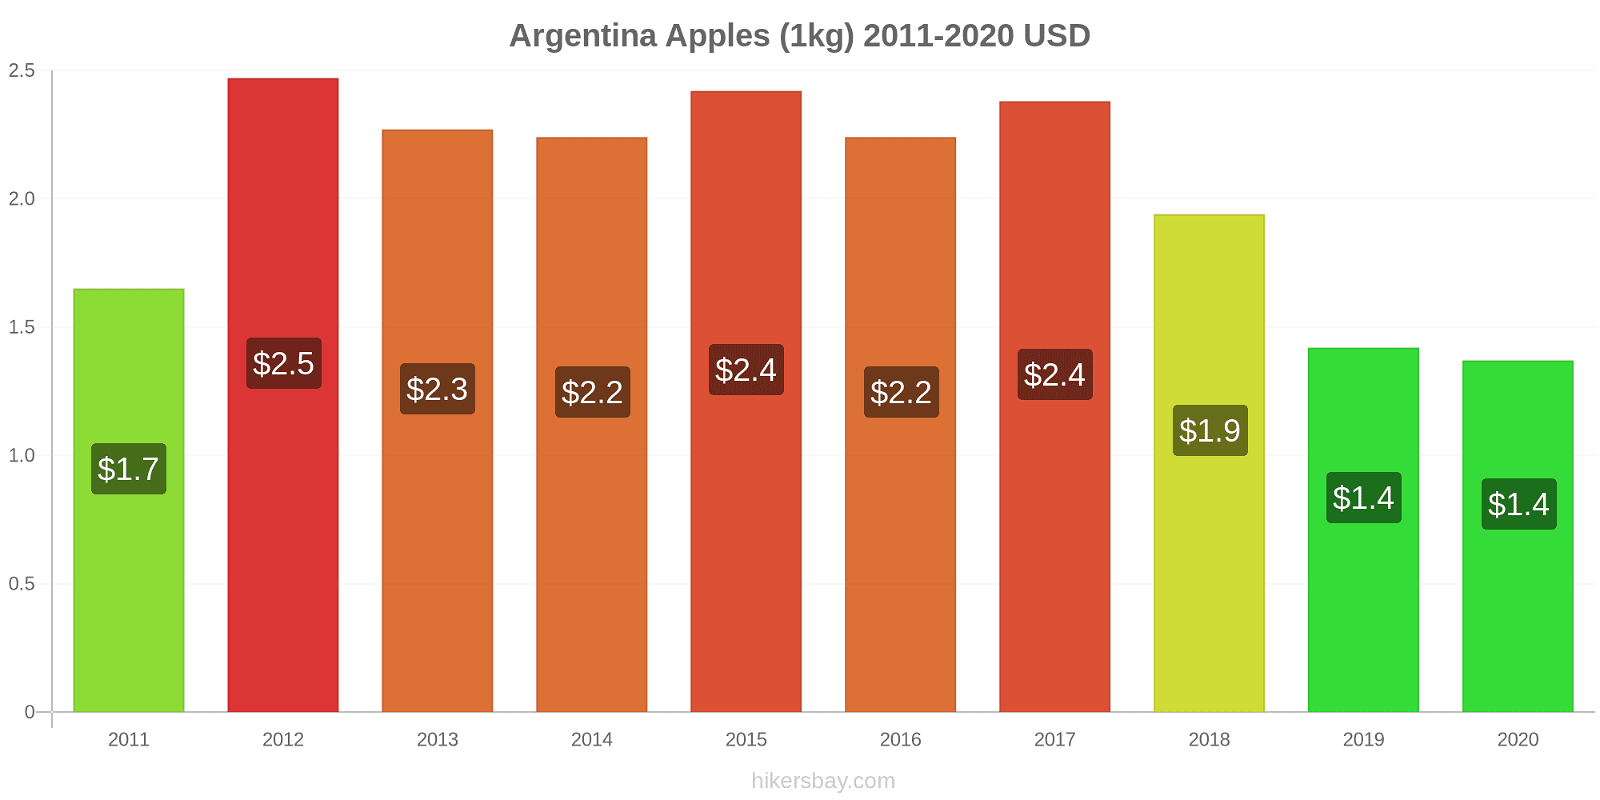 Argentina price changes Apples (1kg) hikersbay.com